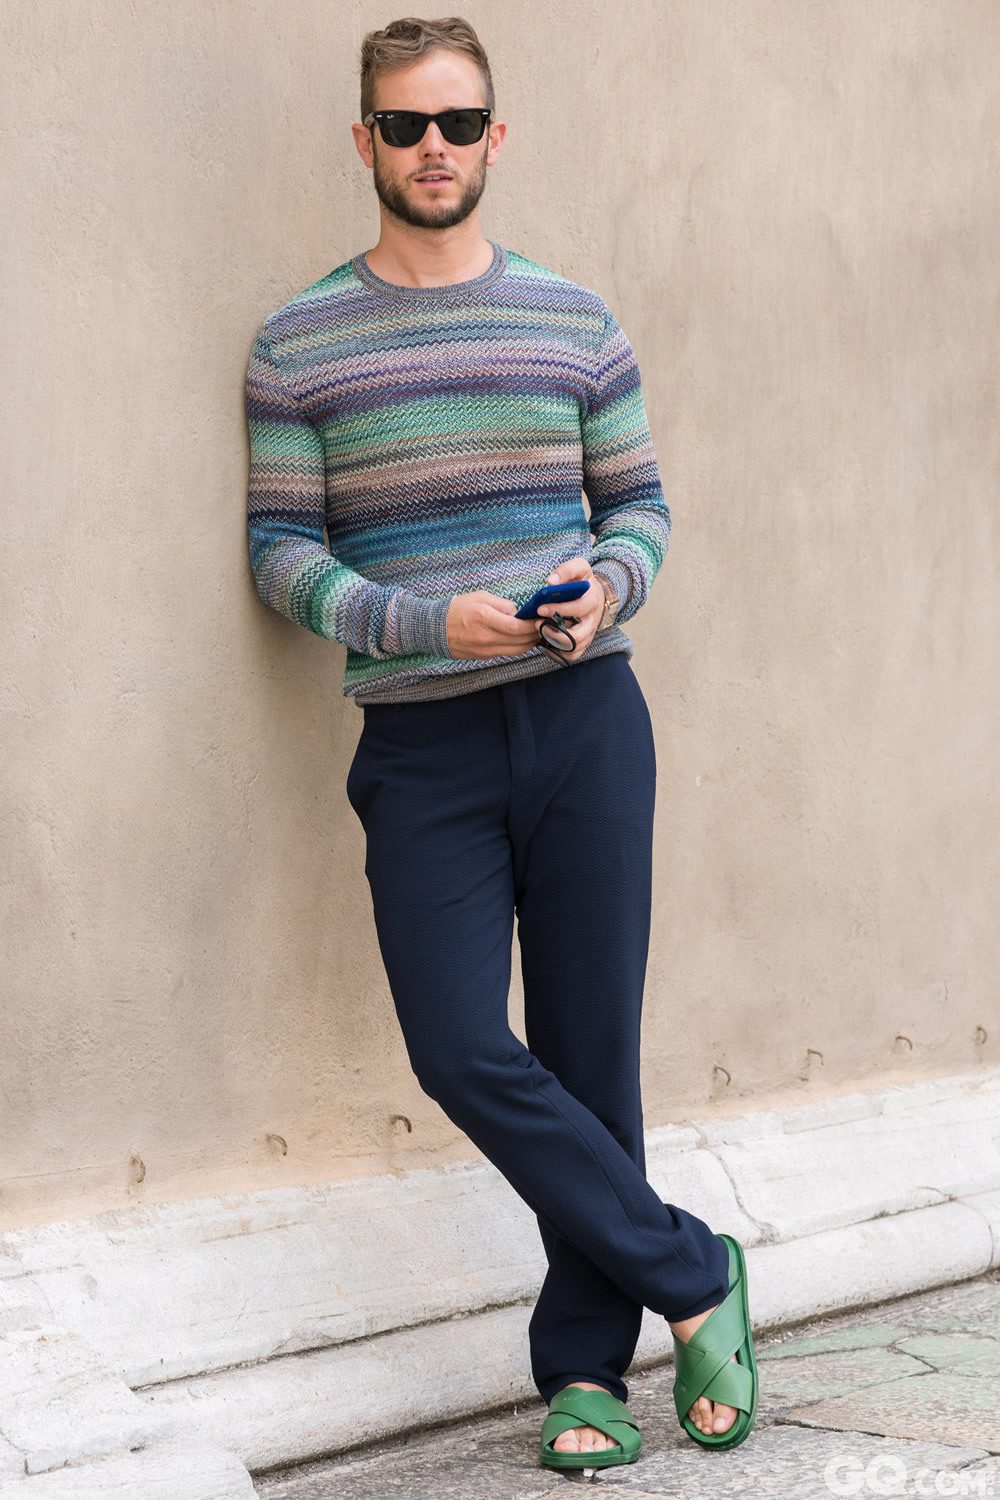 Paolo
Sunglasses: Ray Ban 
Sweater: Missoni
Pants: Armani
Shoes: Fendi

Inspiration: The French Riviera
（法国里维埃拉）